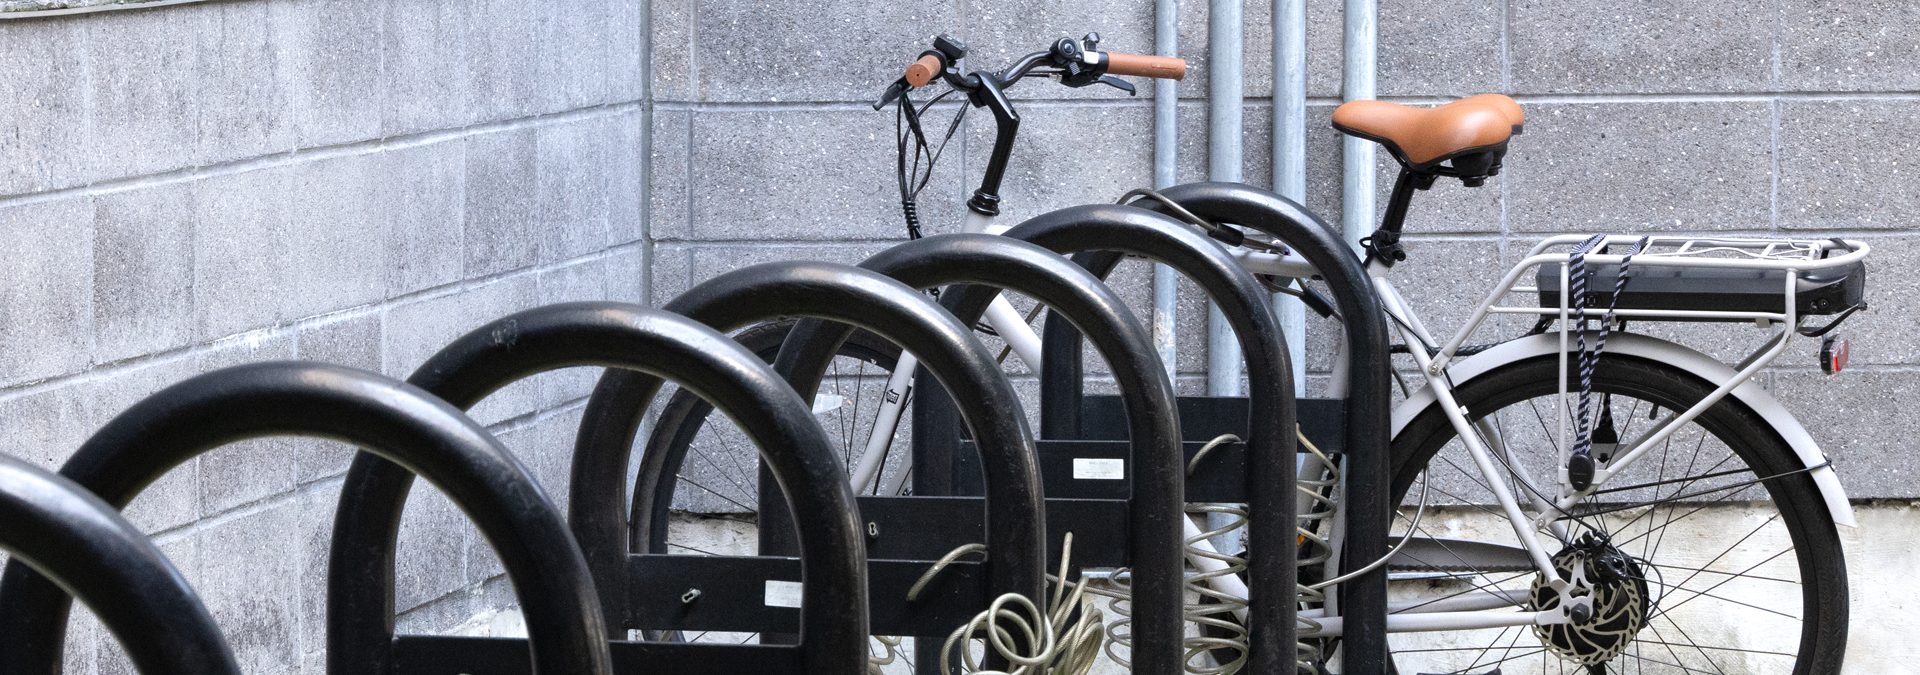 Bike racks at Boston Logan